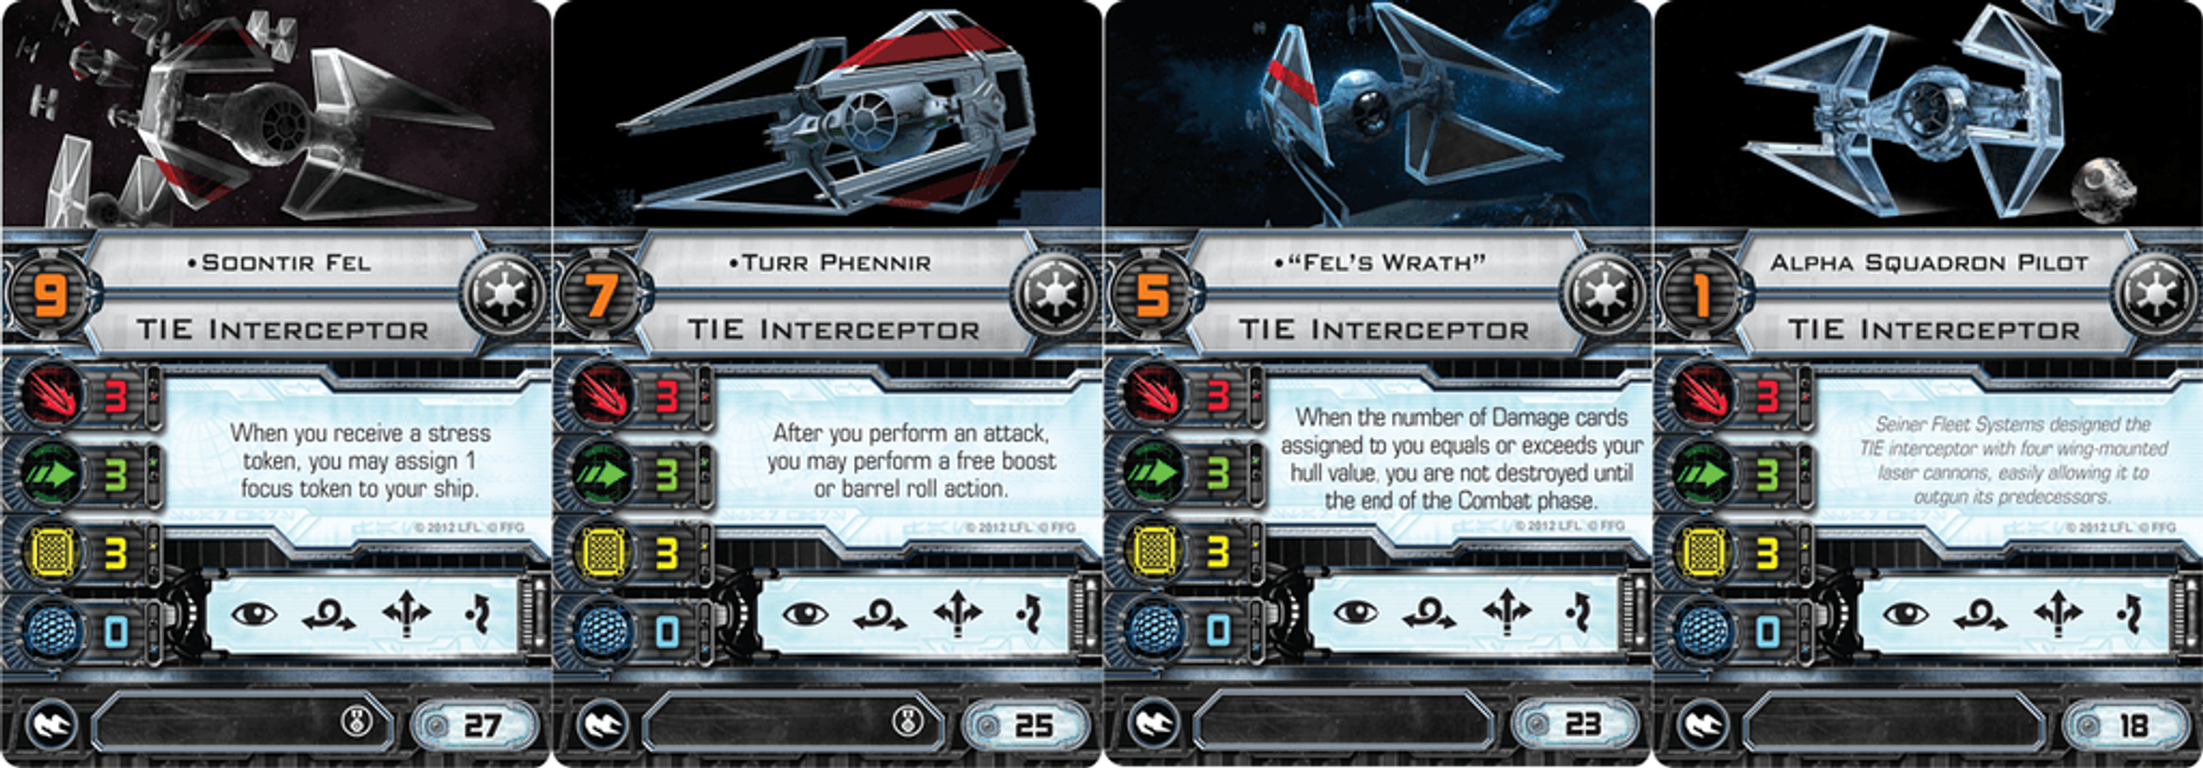 Star Wars: X-Wing Miniatures Game - TIE Interceptor Expansion Pack kaarten